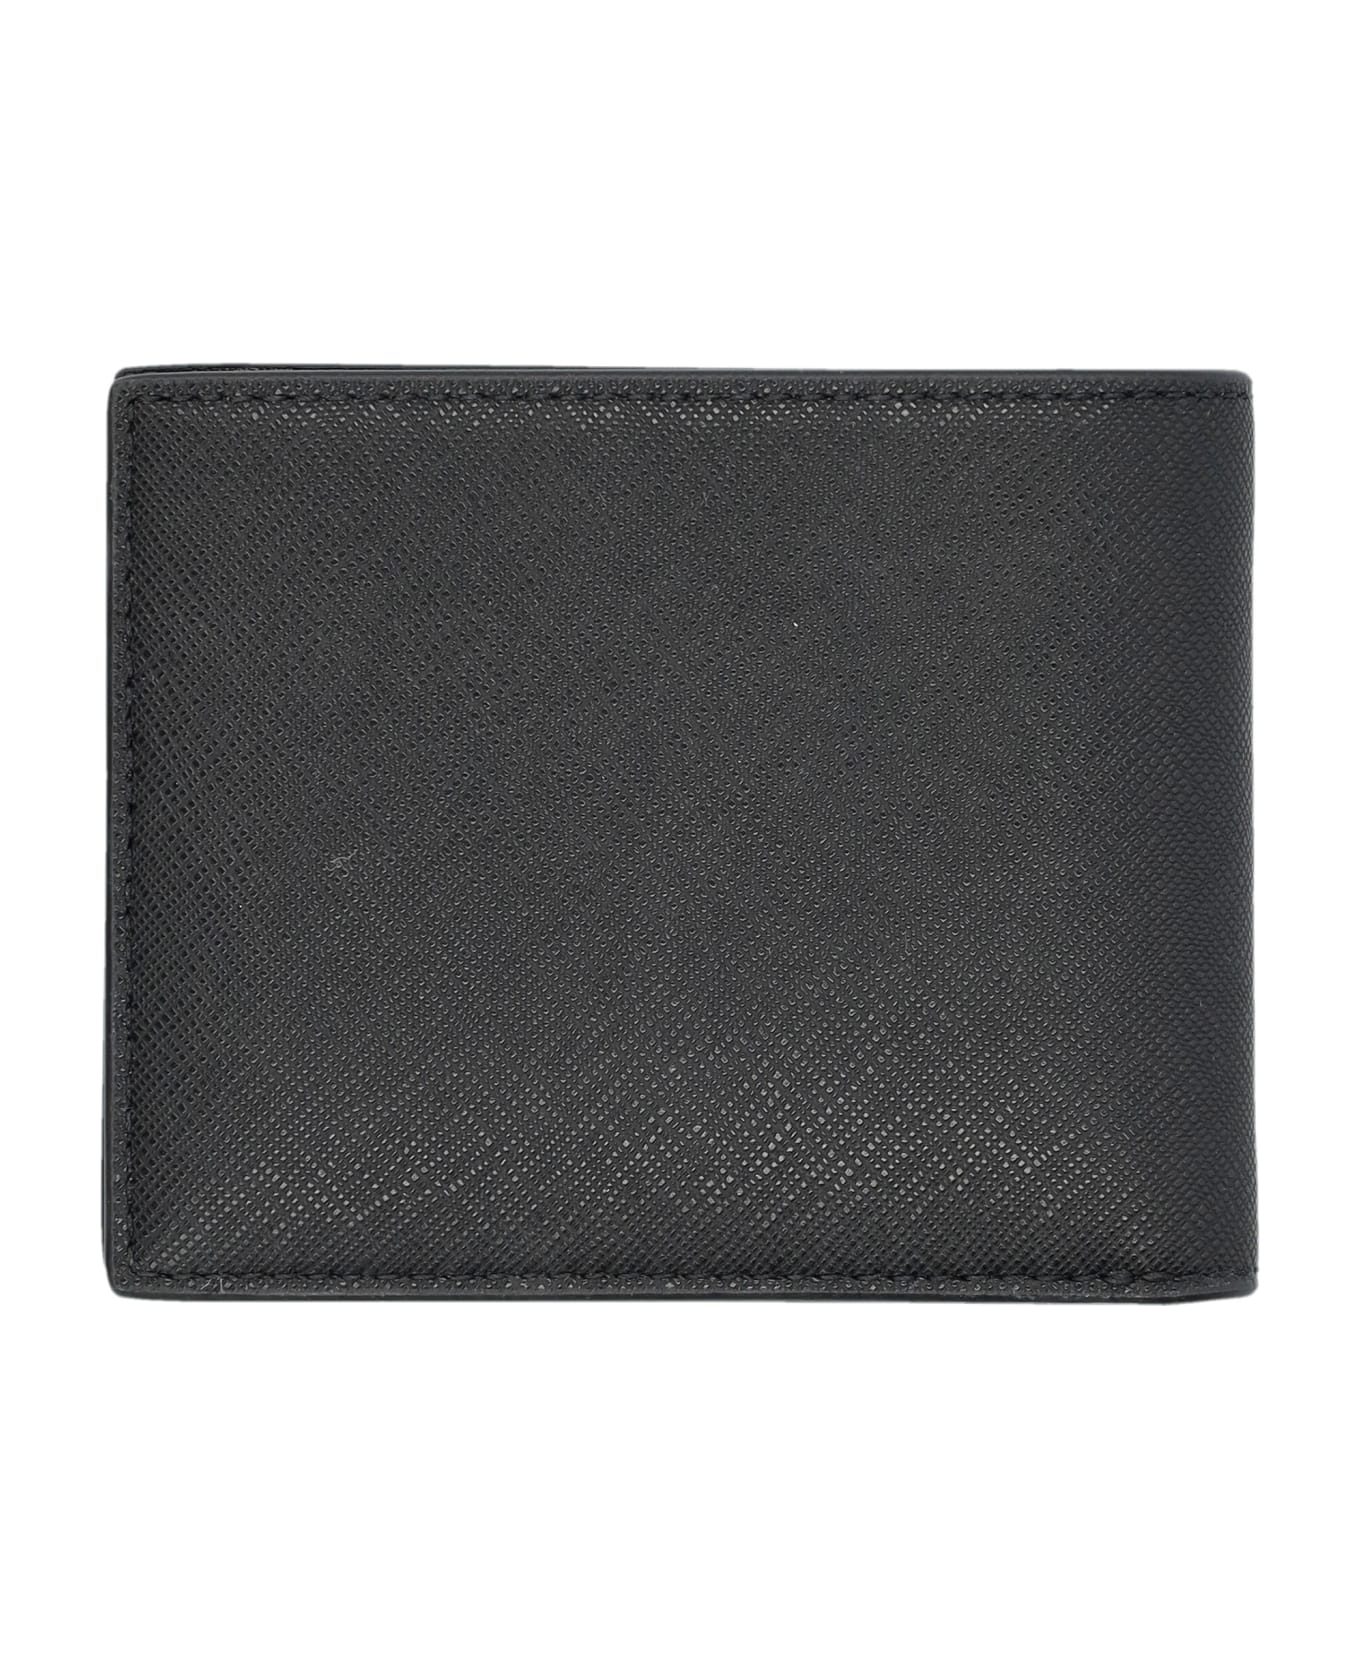 Bally Bevye Wallet - BLACK